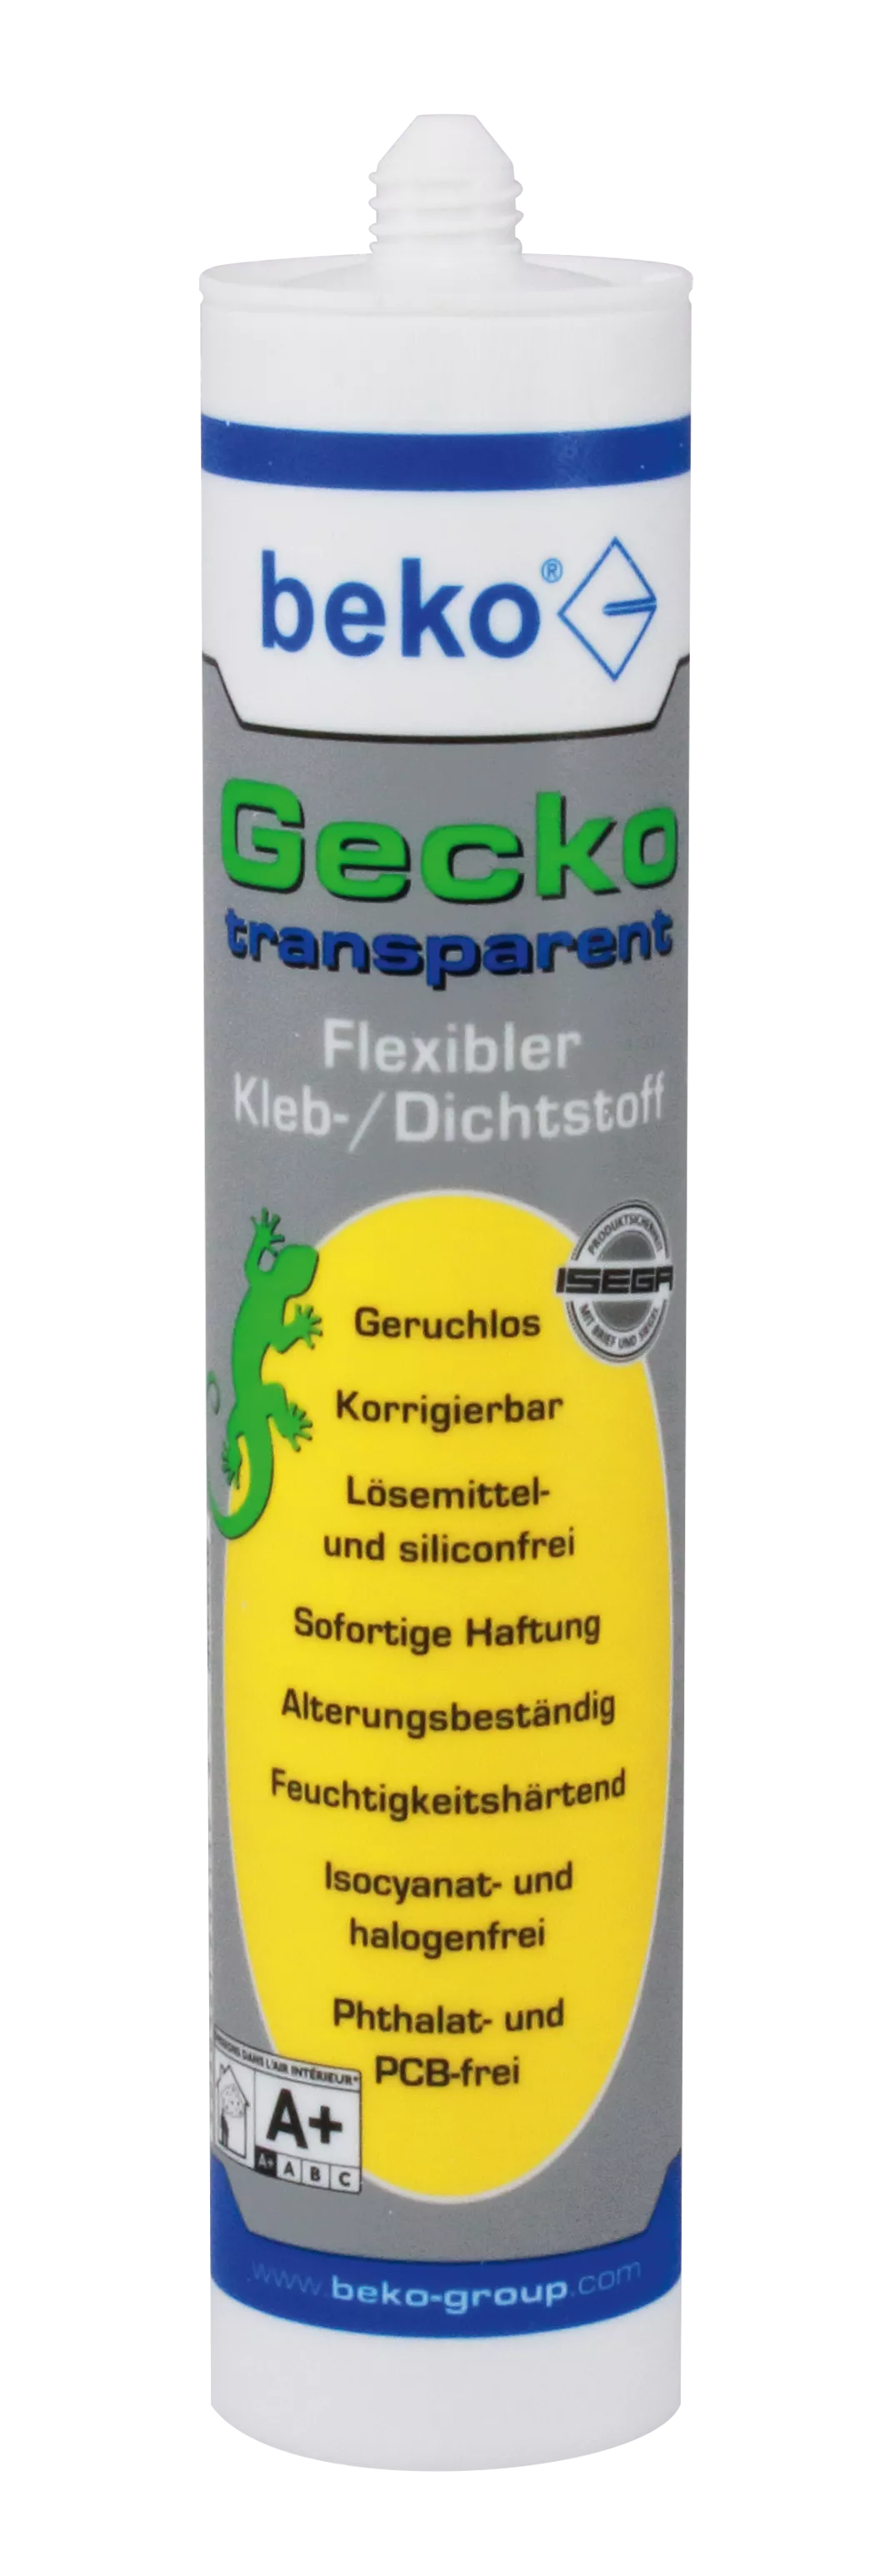 beko Gecko 290 ml TRANSPARENT Kleb-/Dichtstoff 1St.